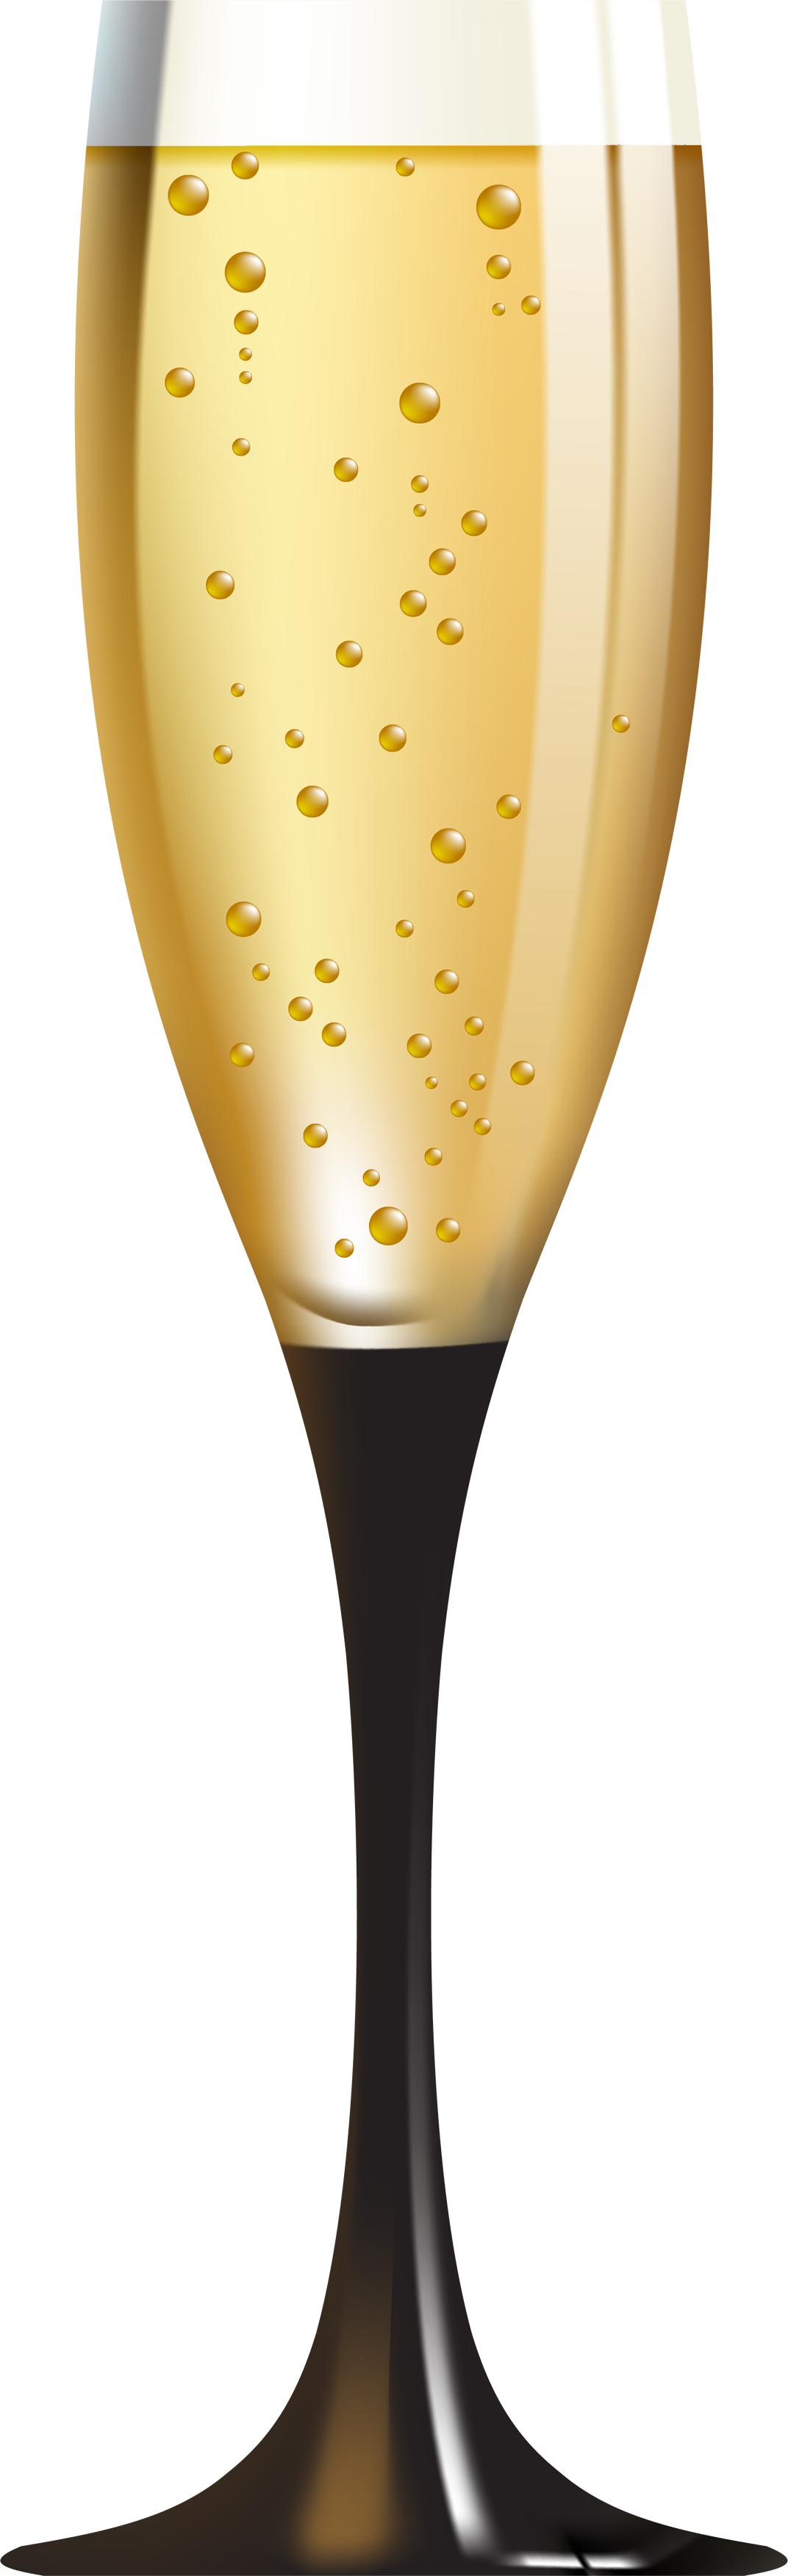 Champagnerglas